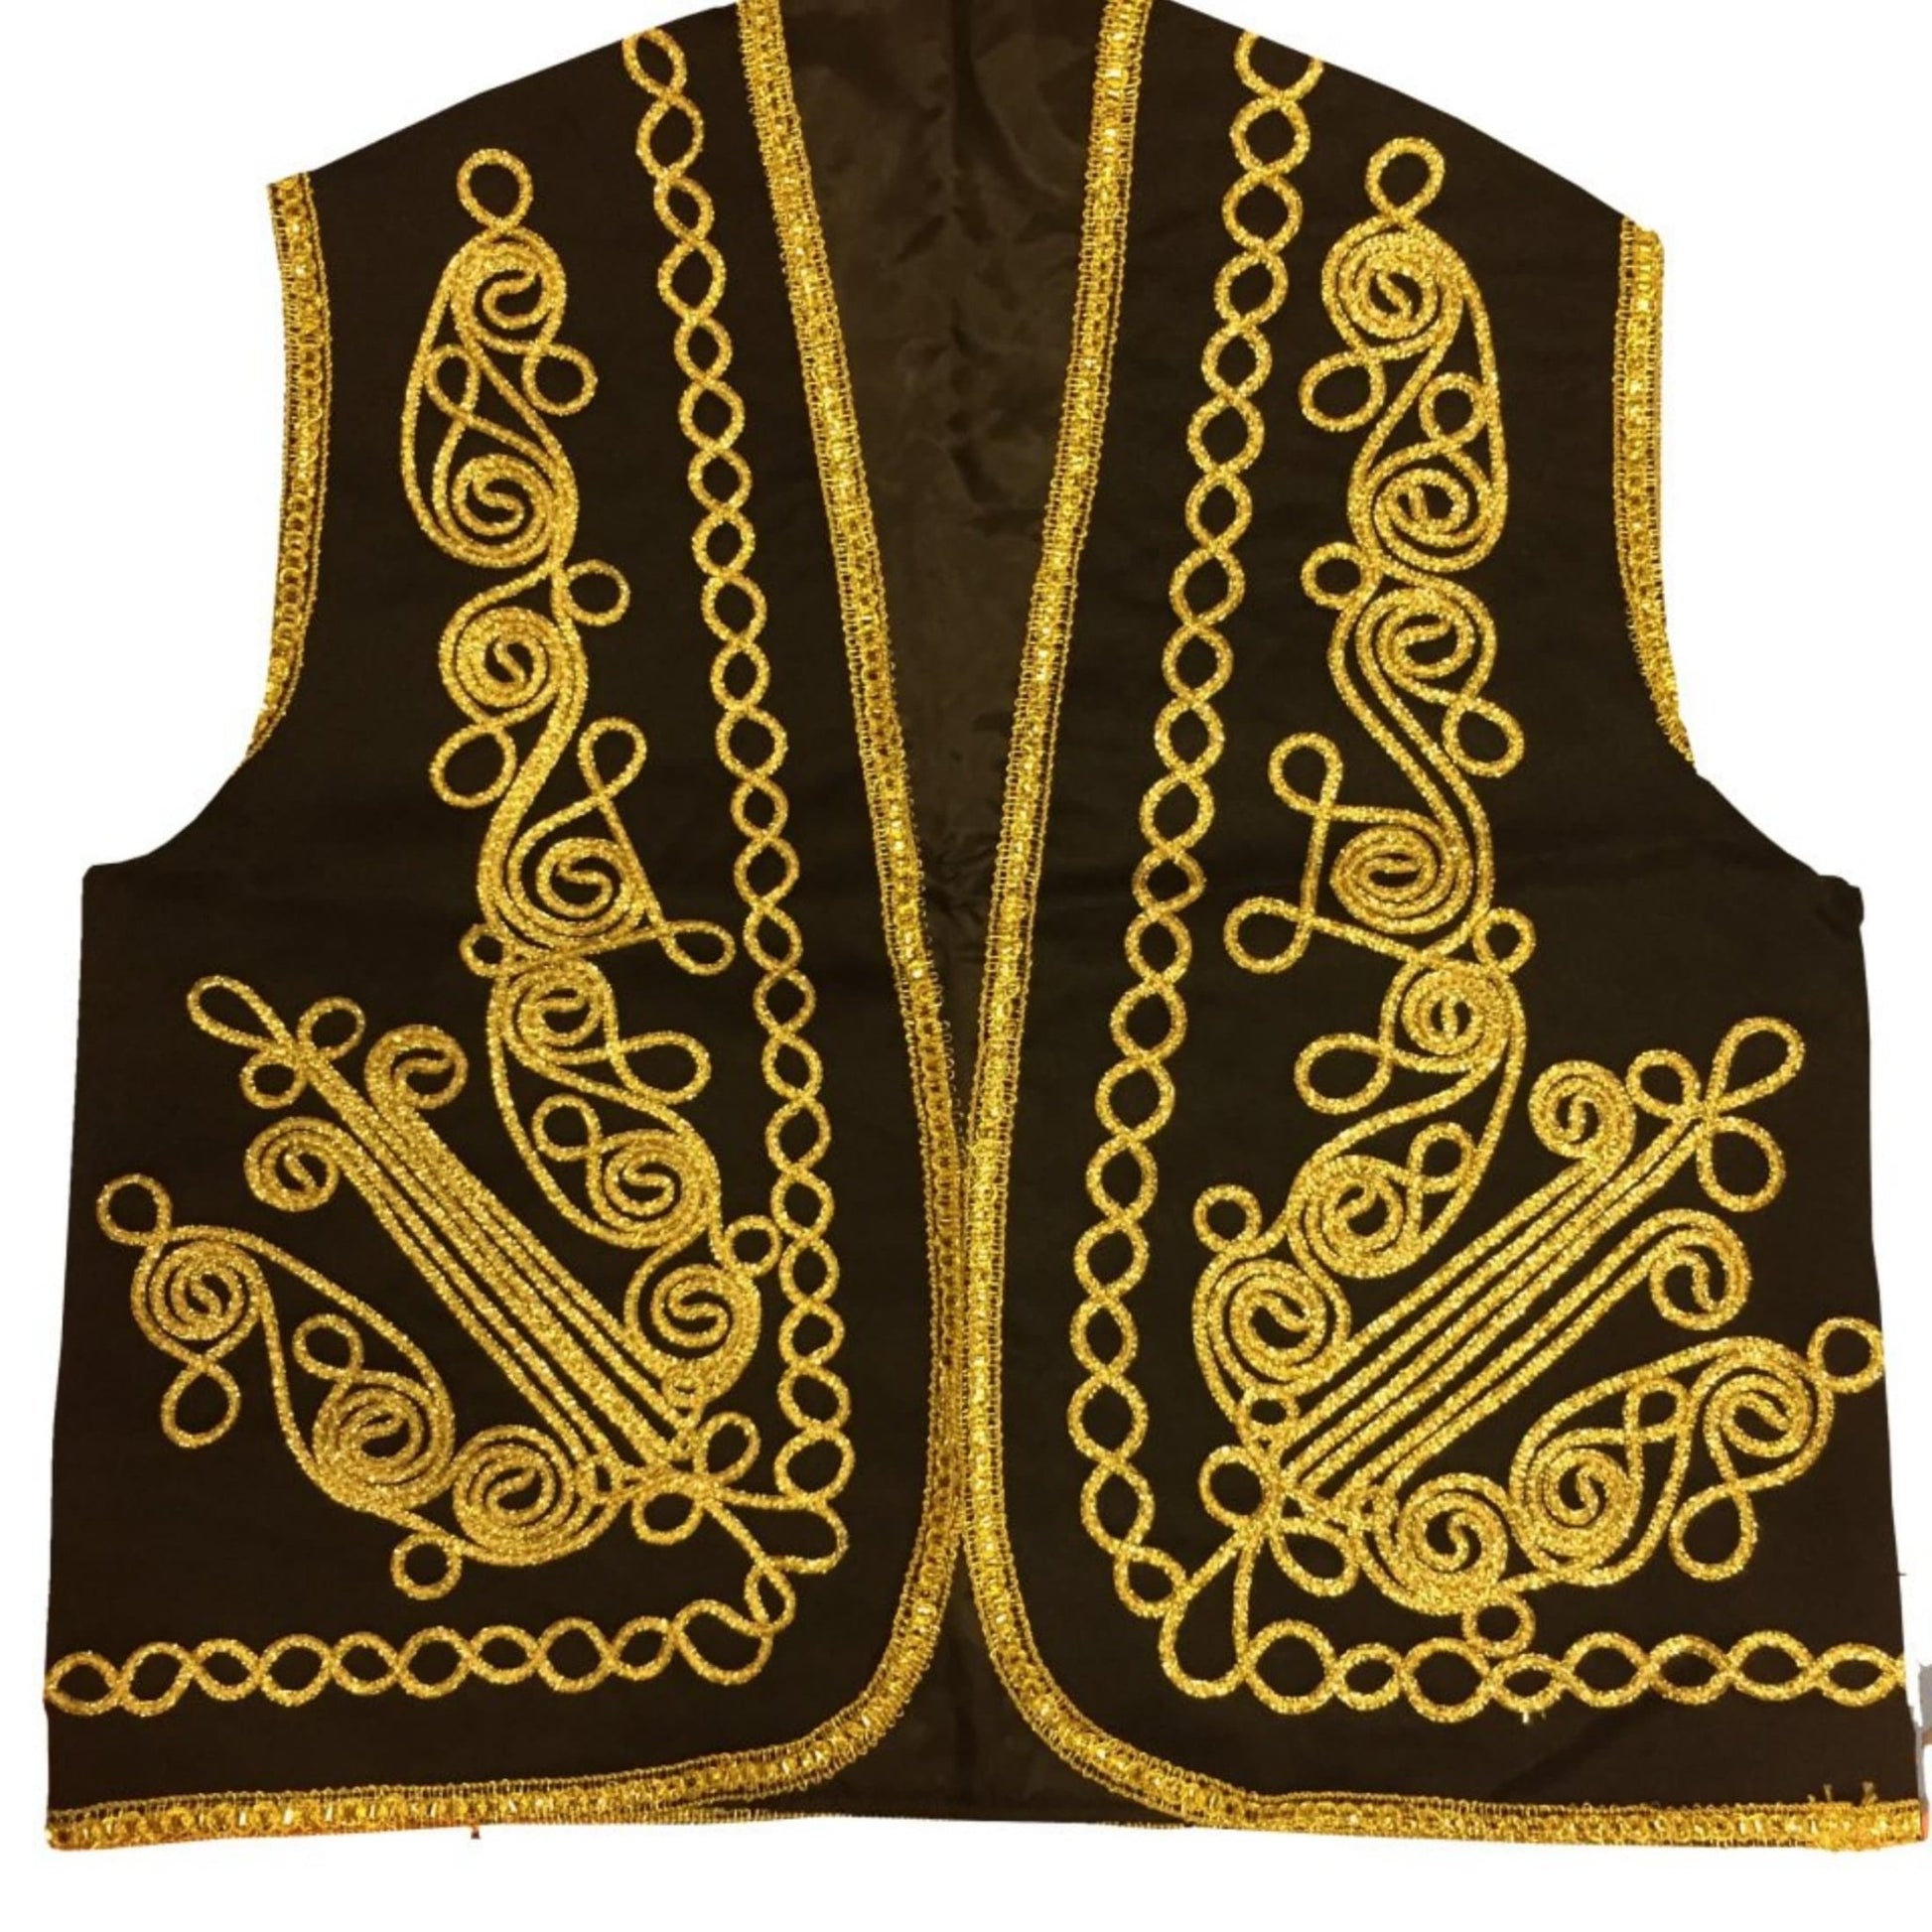 Handmade Embroidered Velvet Ottoman Vest - Traditional Muslim Men's Costume - Golden Embroidery - Abdulhamid & Fatih Sultan Mehmet Gift - Turkish TV Series